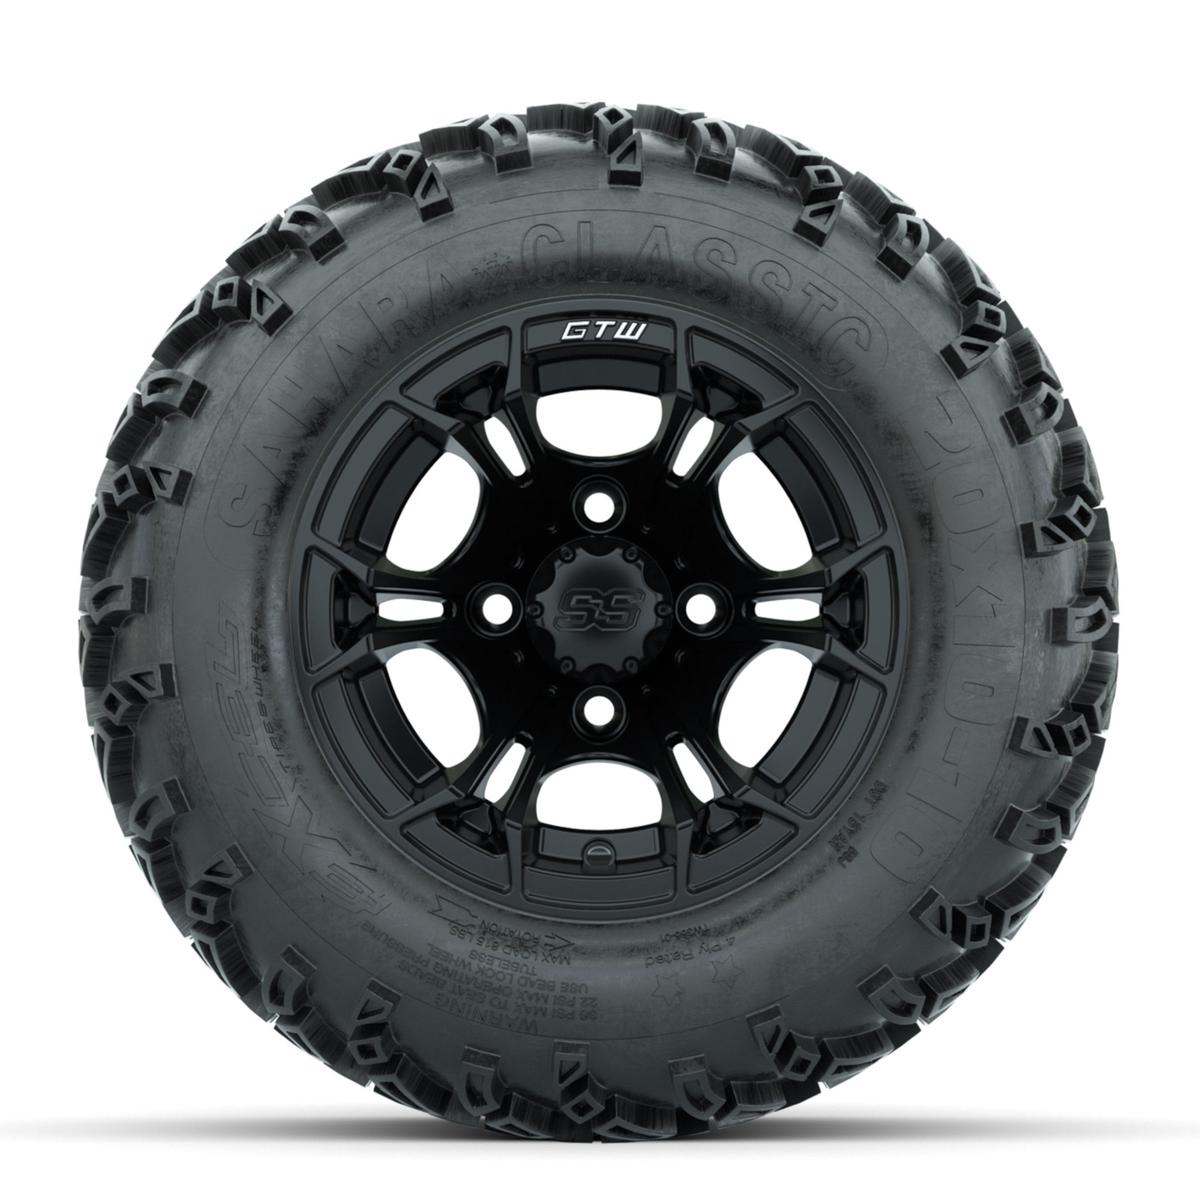 GTW Spyder Matte Black 10 in Wheels with 20x10-10 Sahara Classic All Terrain Tires – Full Set